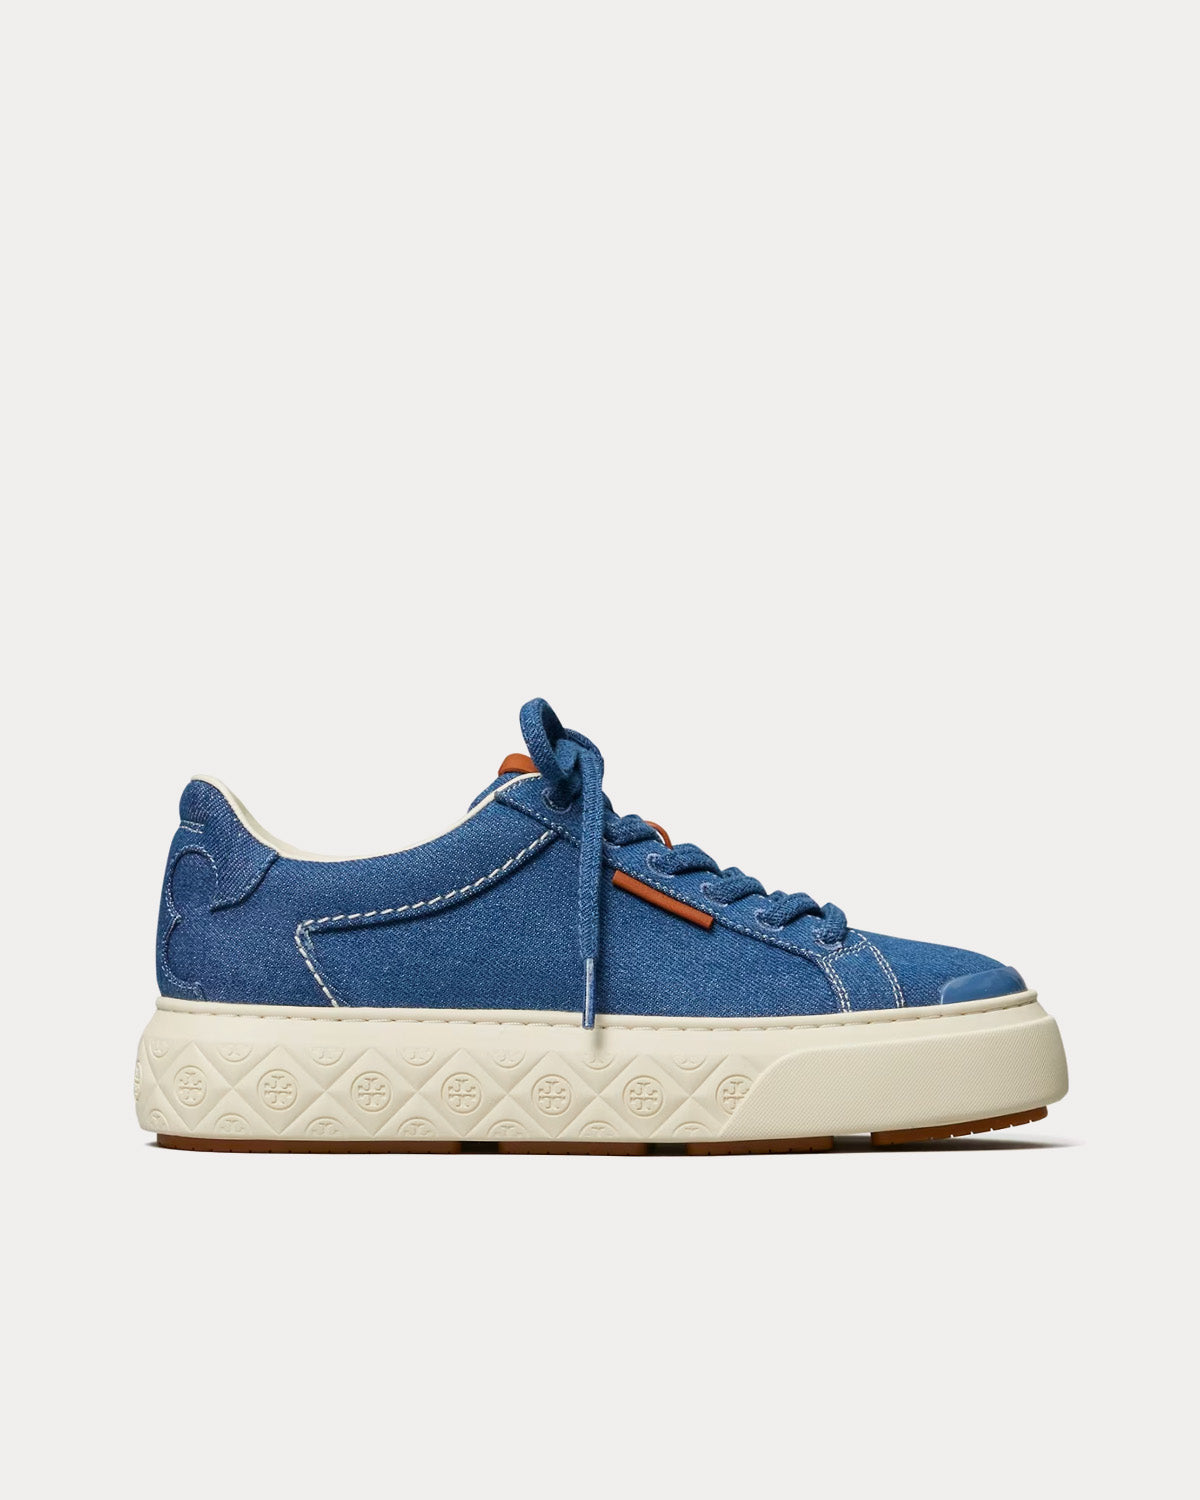 Tory Burch - Ladybug Azul Low Top Sneakers